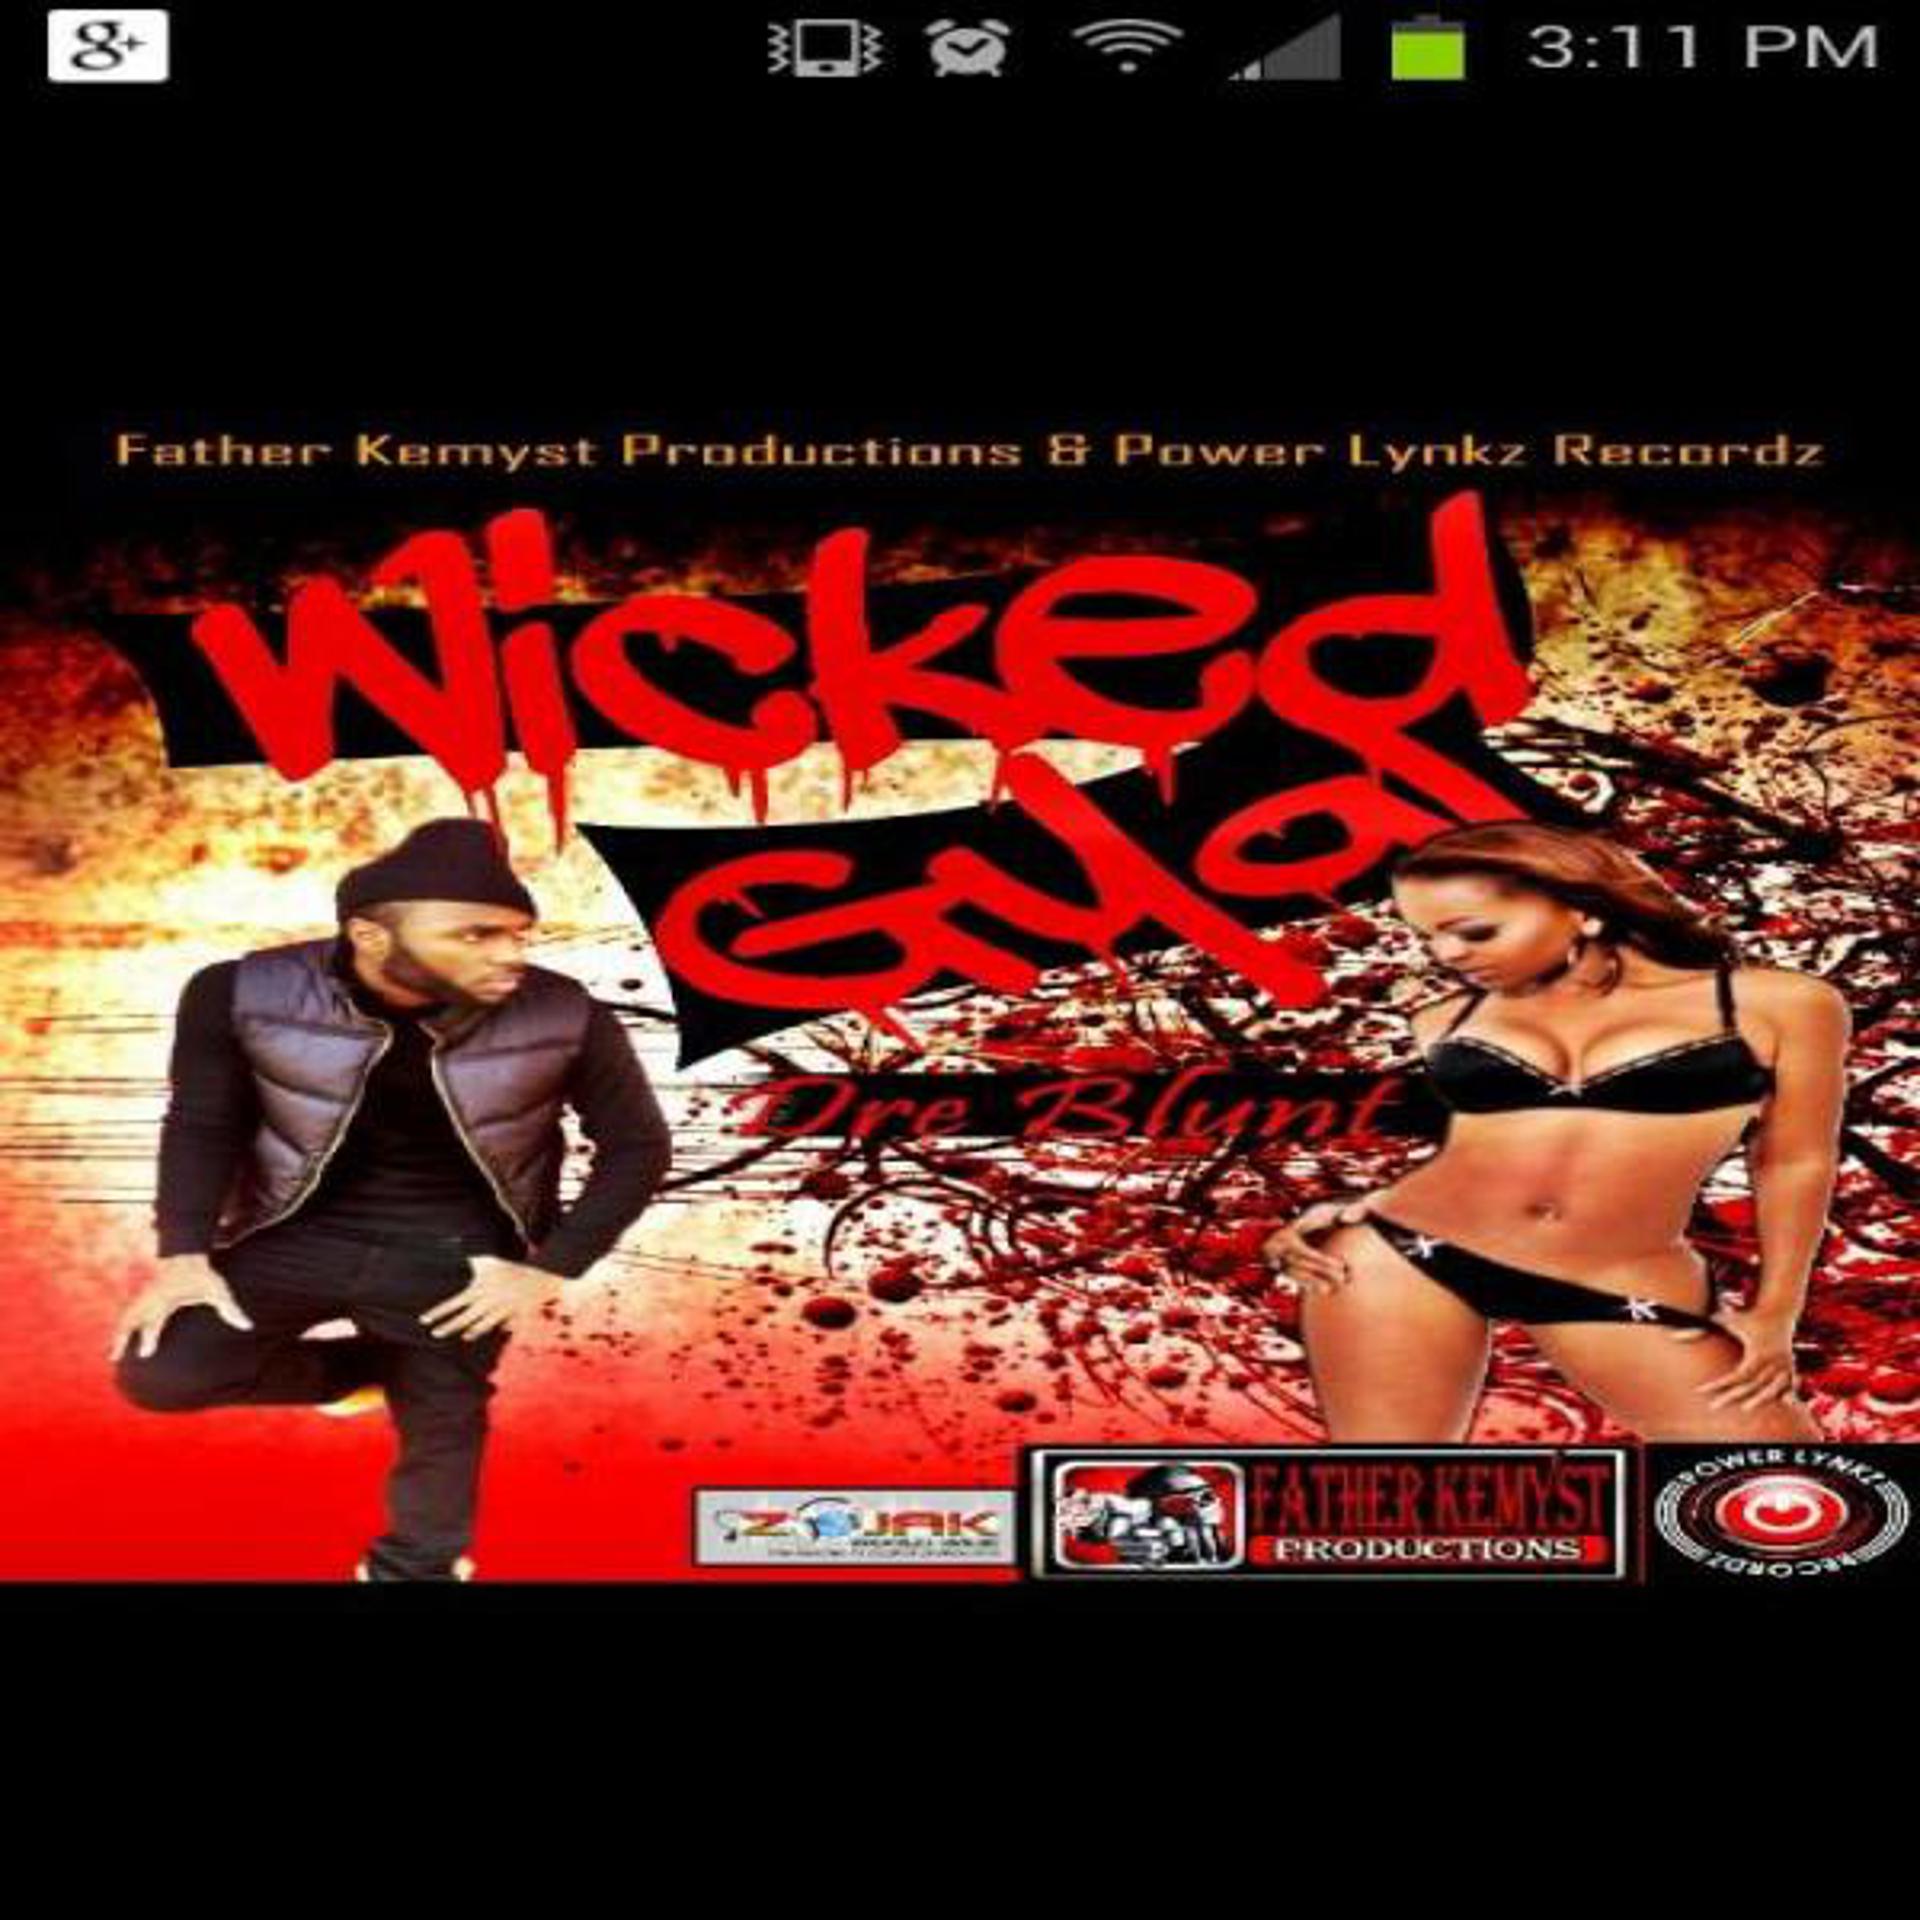 Постер альбома Wicked Gyal